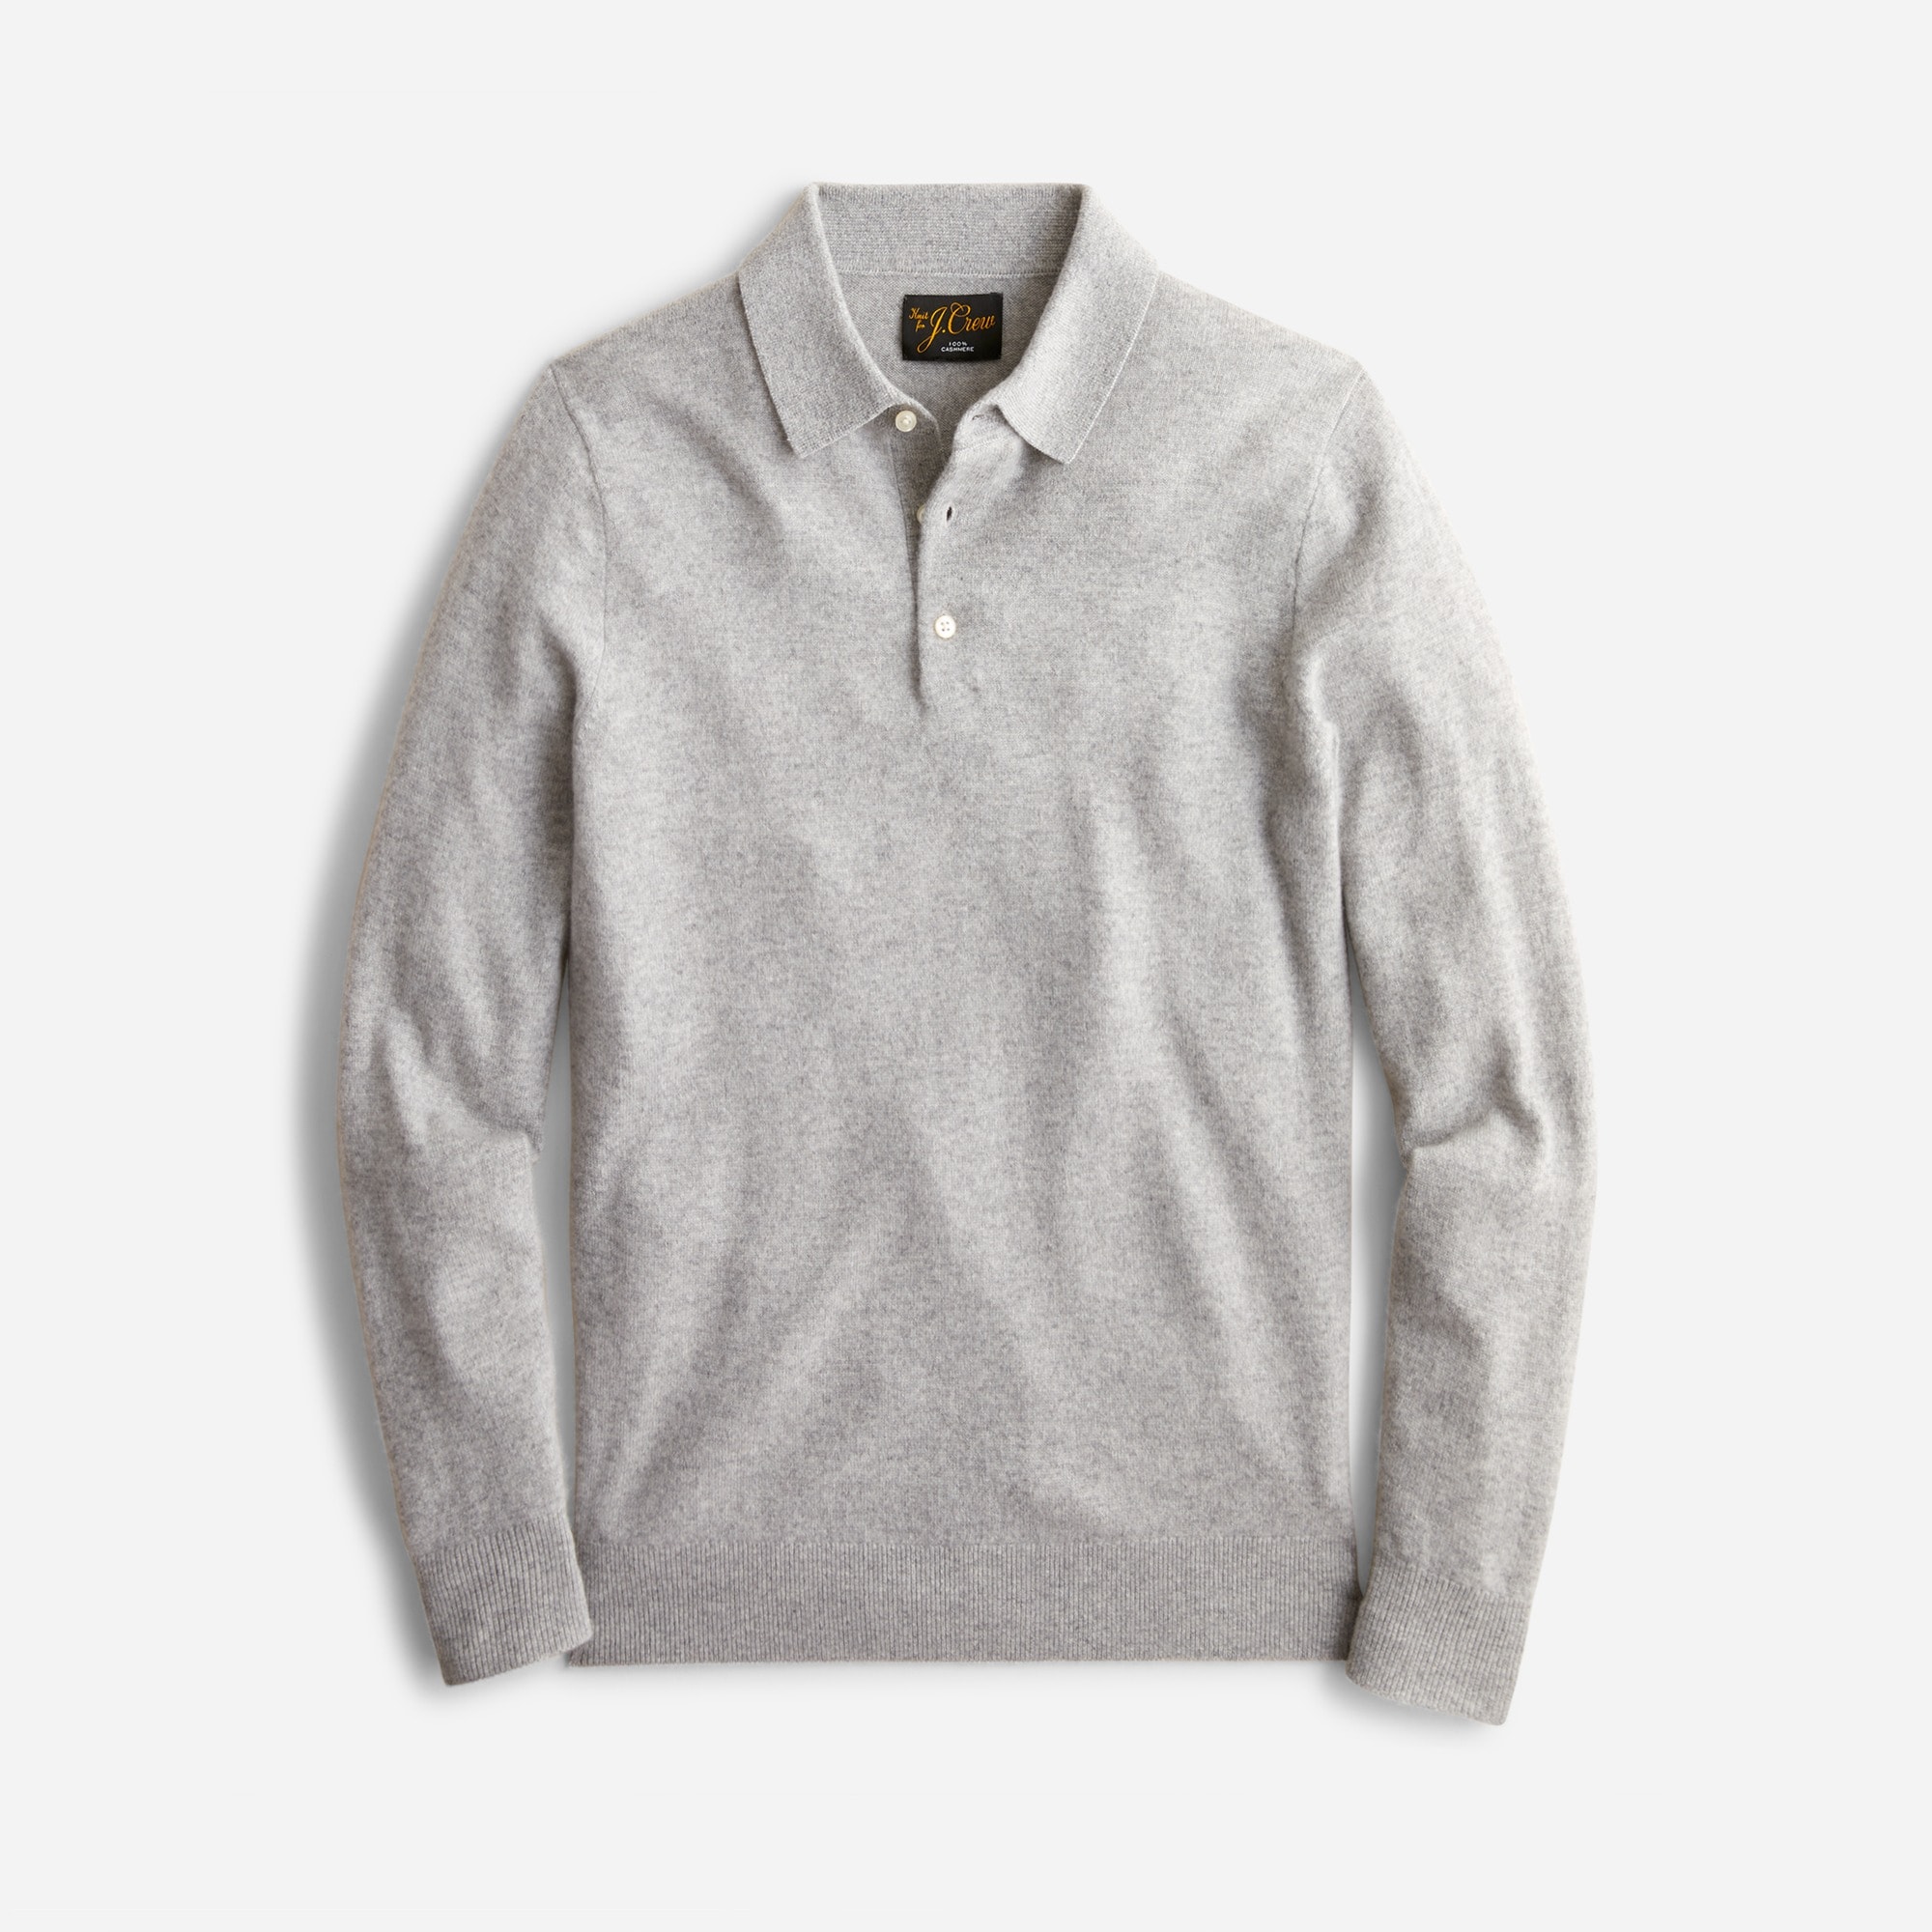 Jcrew Cashmere collared sweater-polo